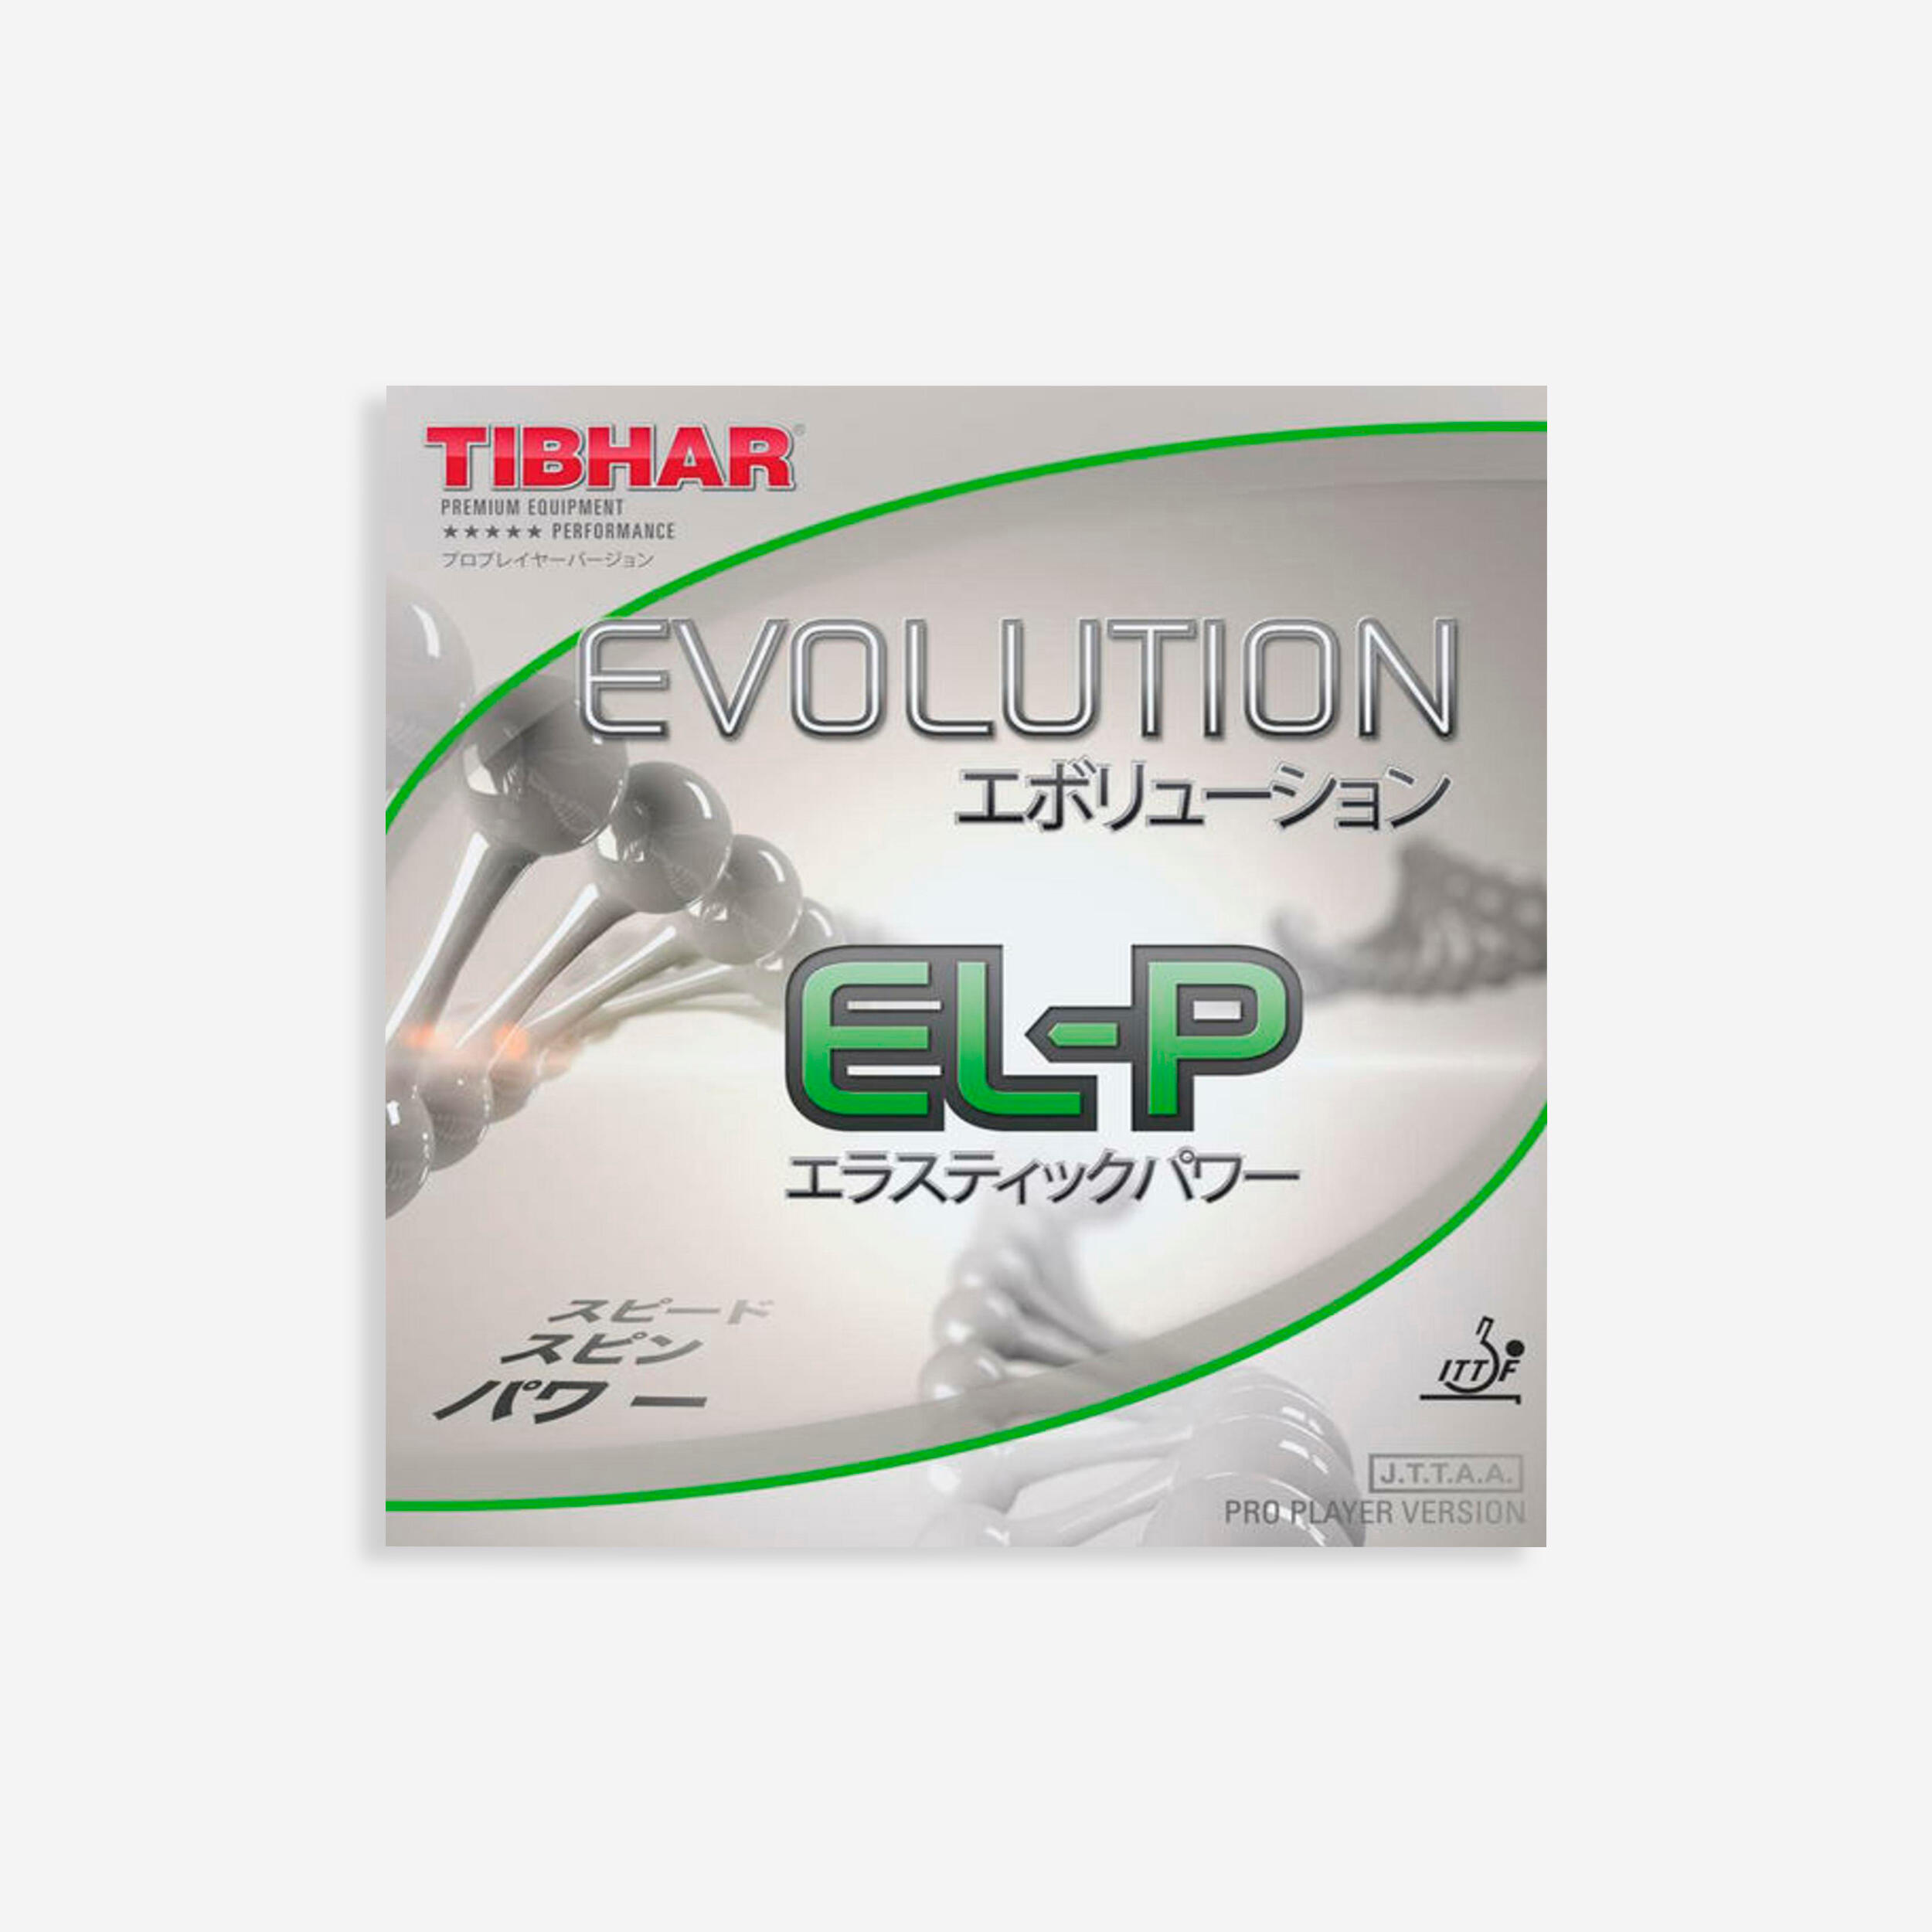 Față Paletă Tenis Evolution EL-P TIBHAR decathlon.ro